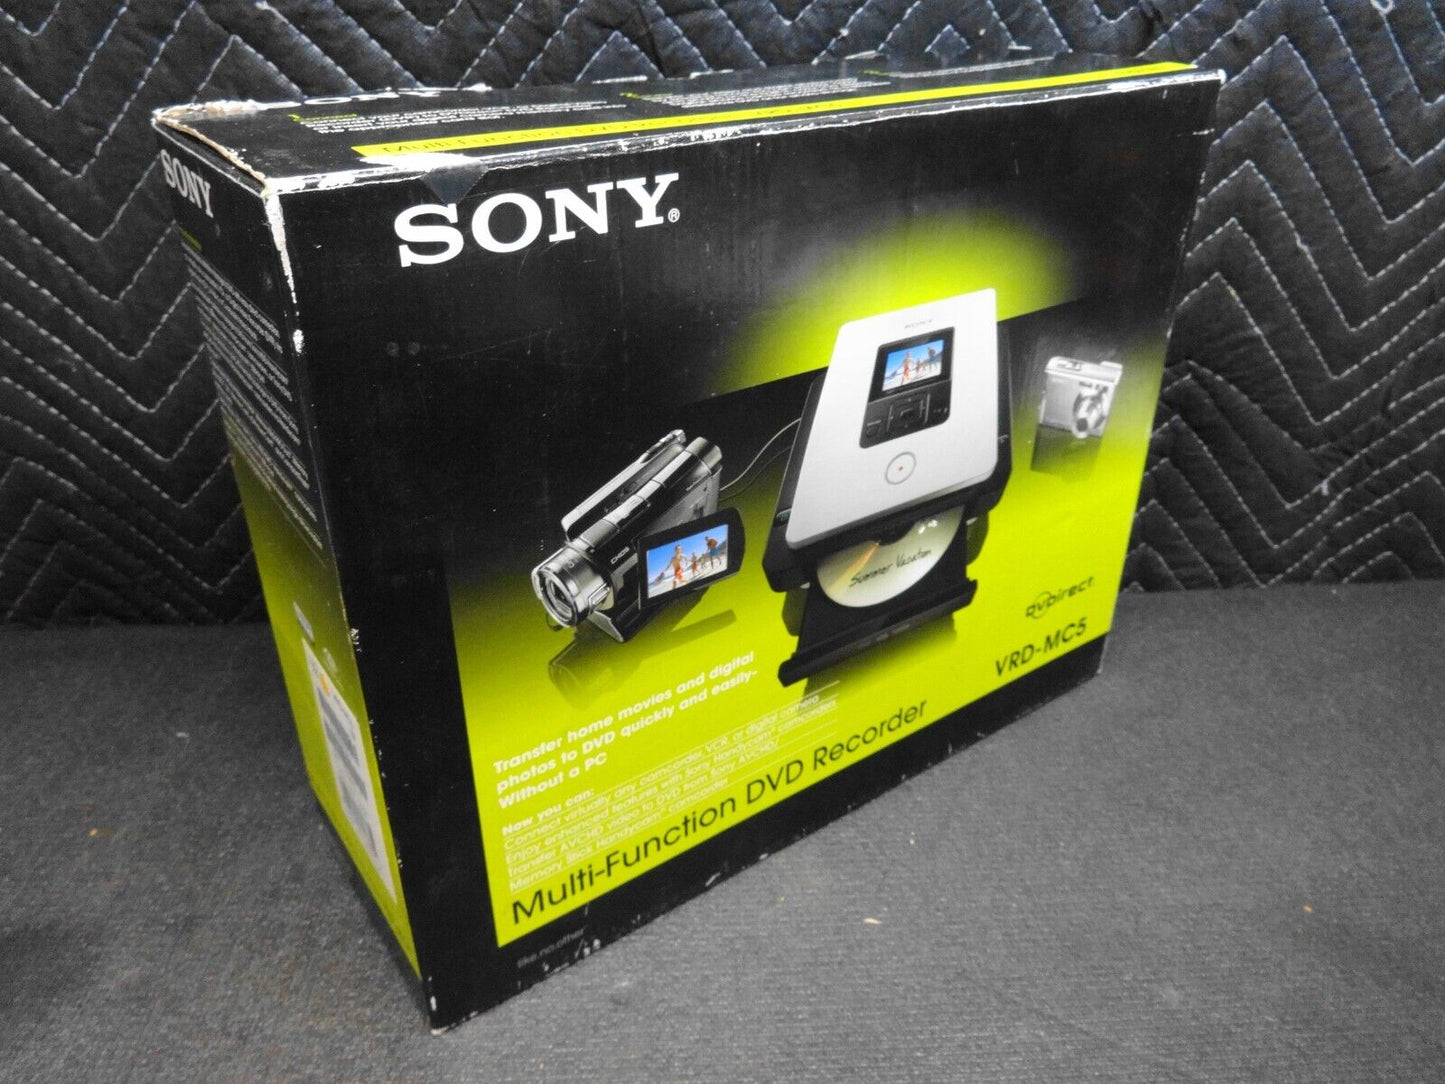 Sony Multi-Function DVD Recorder VRD-MC5 Camcorder or VHS to DVD Converter NIB